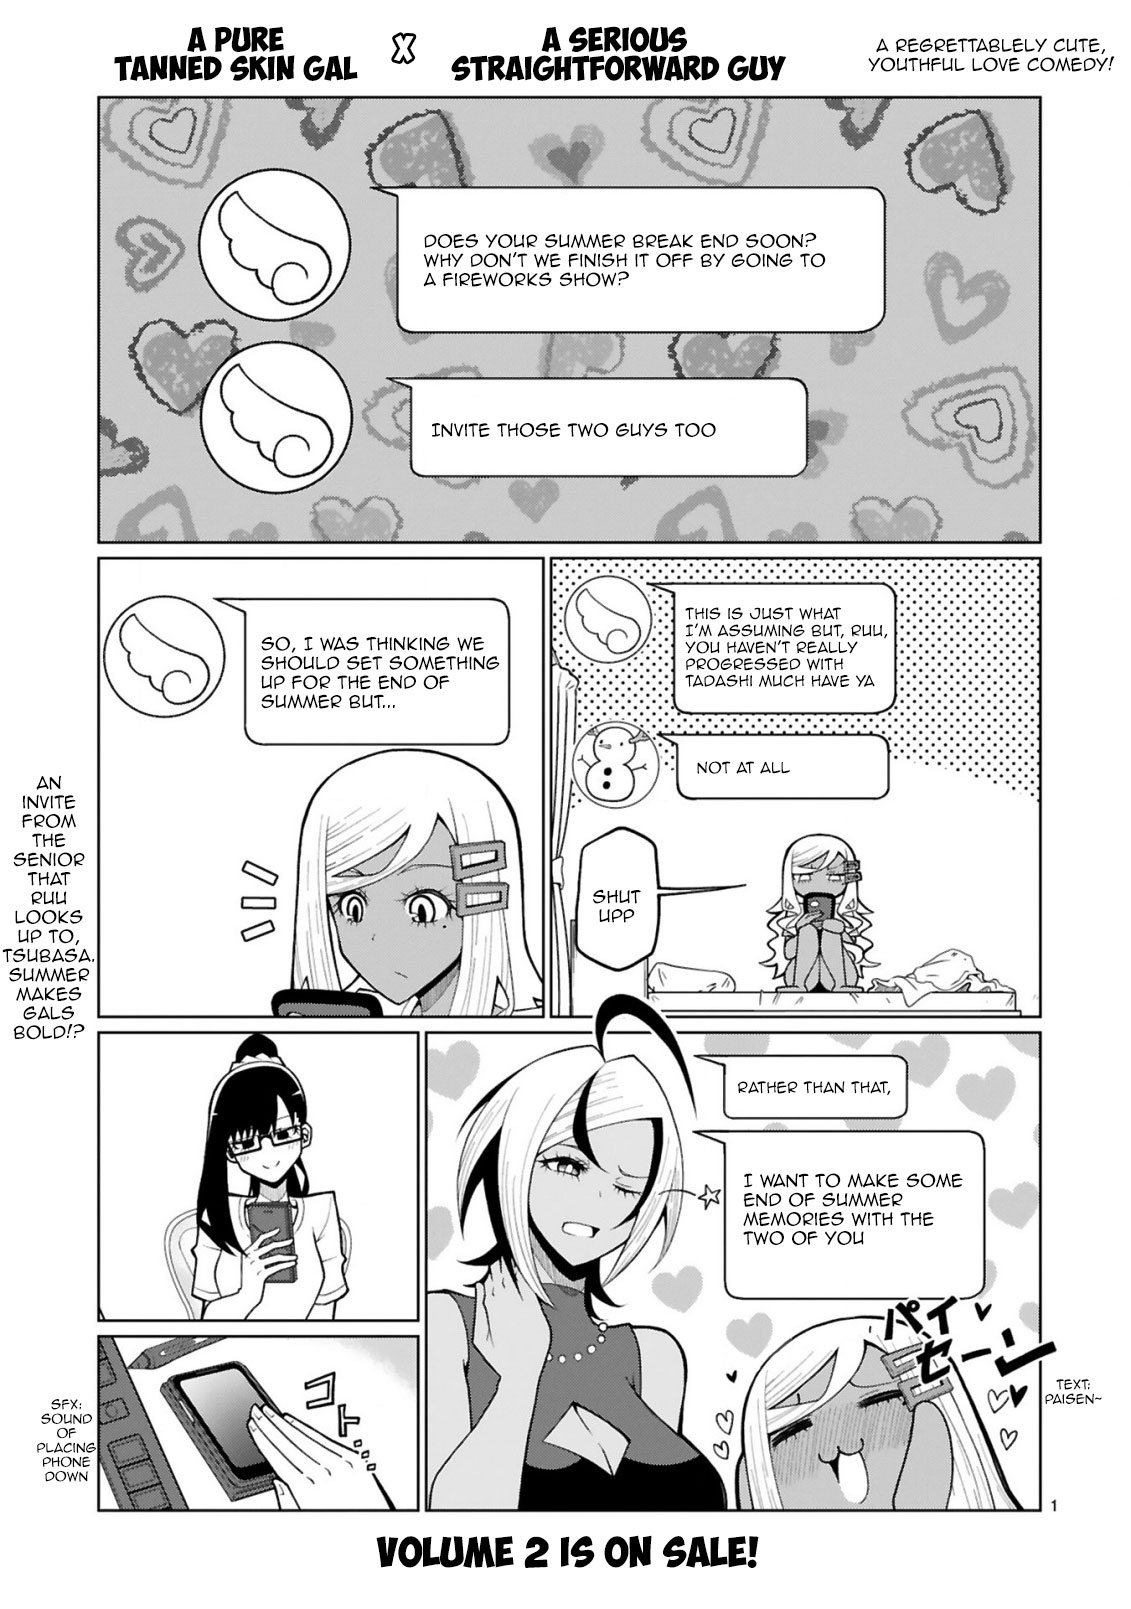 Tedama Ni Toritai Kurokiya-San - Page 1